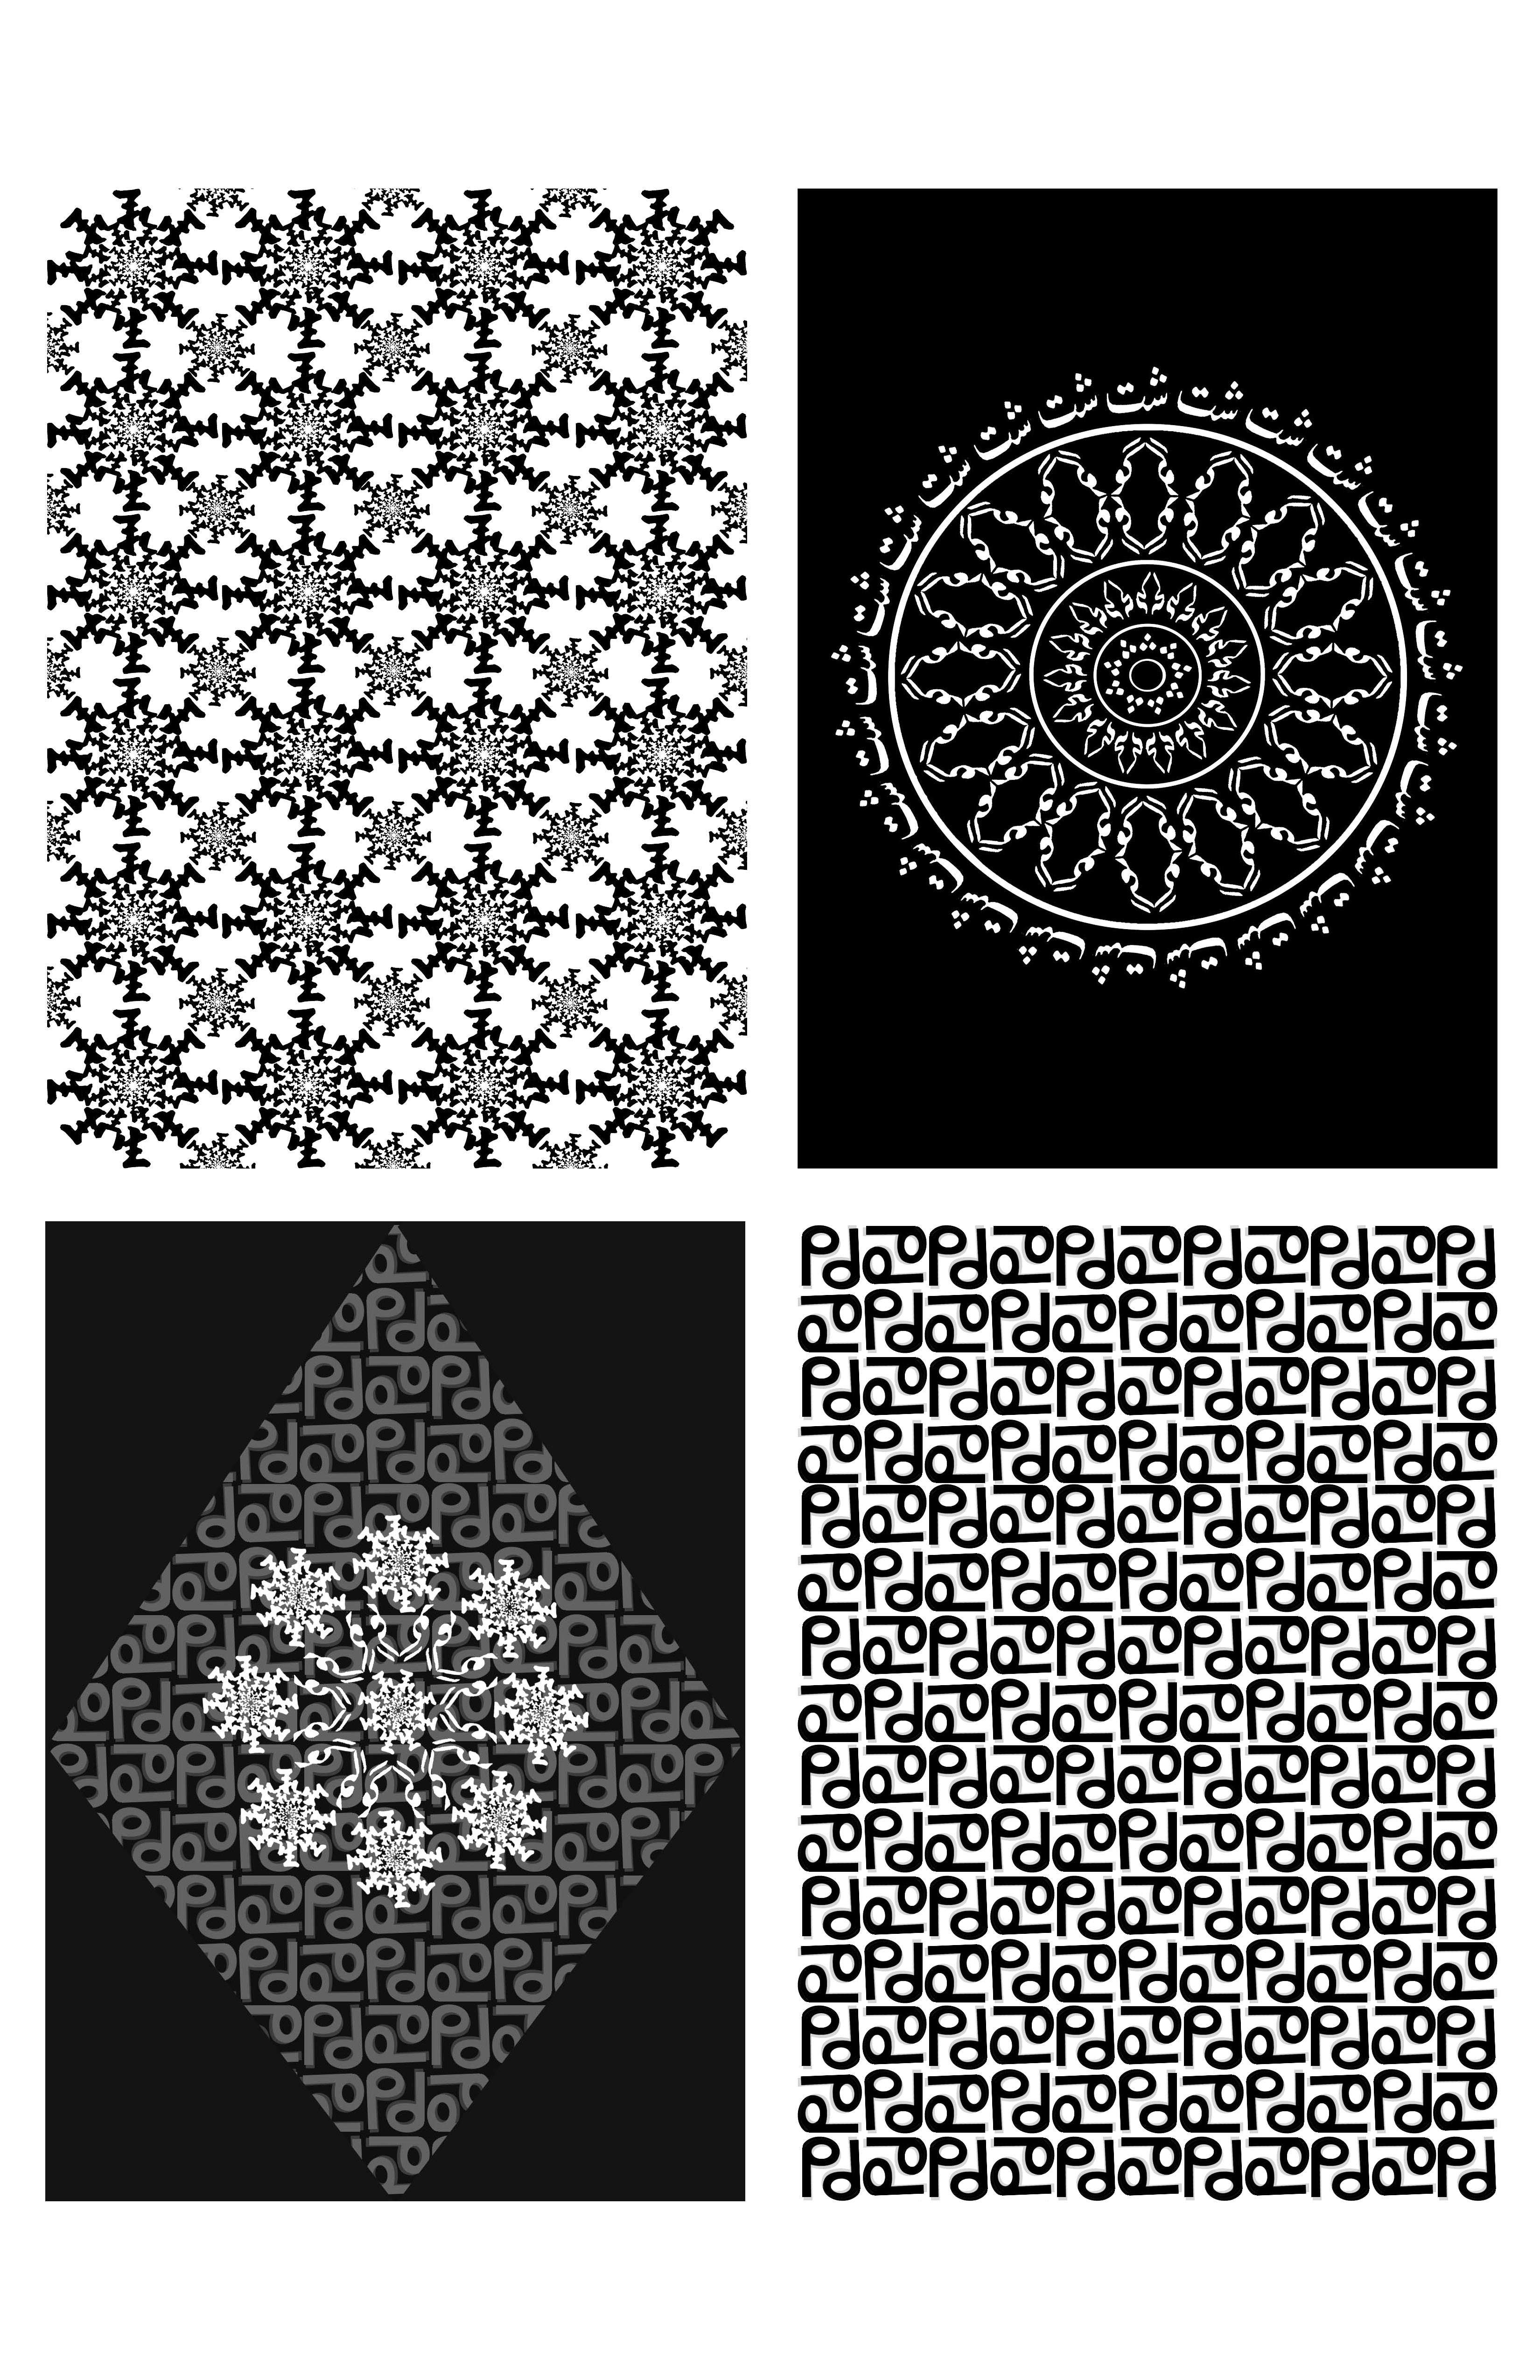 Letterform Patterns